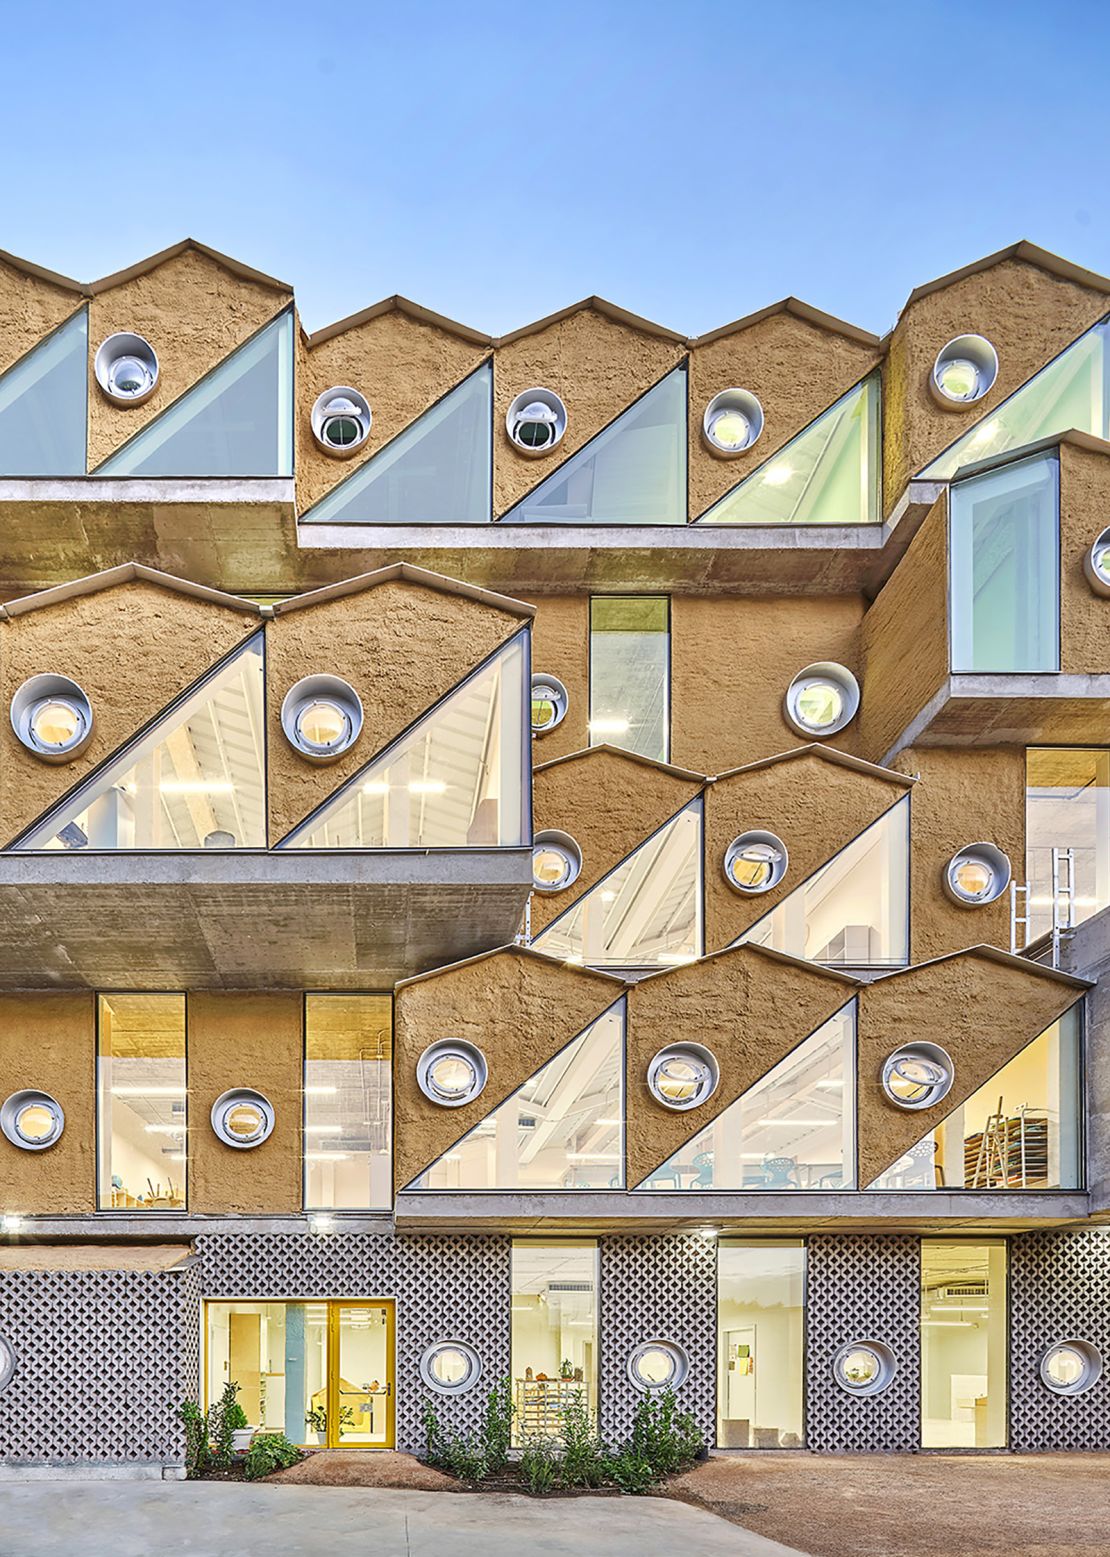 The Reggio School features a cork facade to encourage biodiversity.